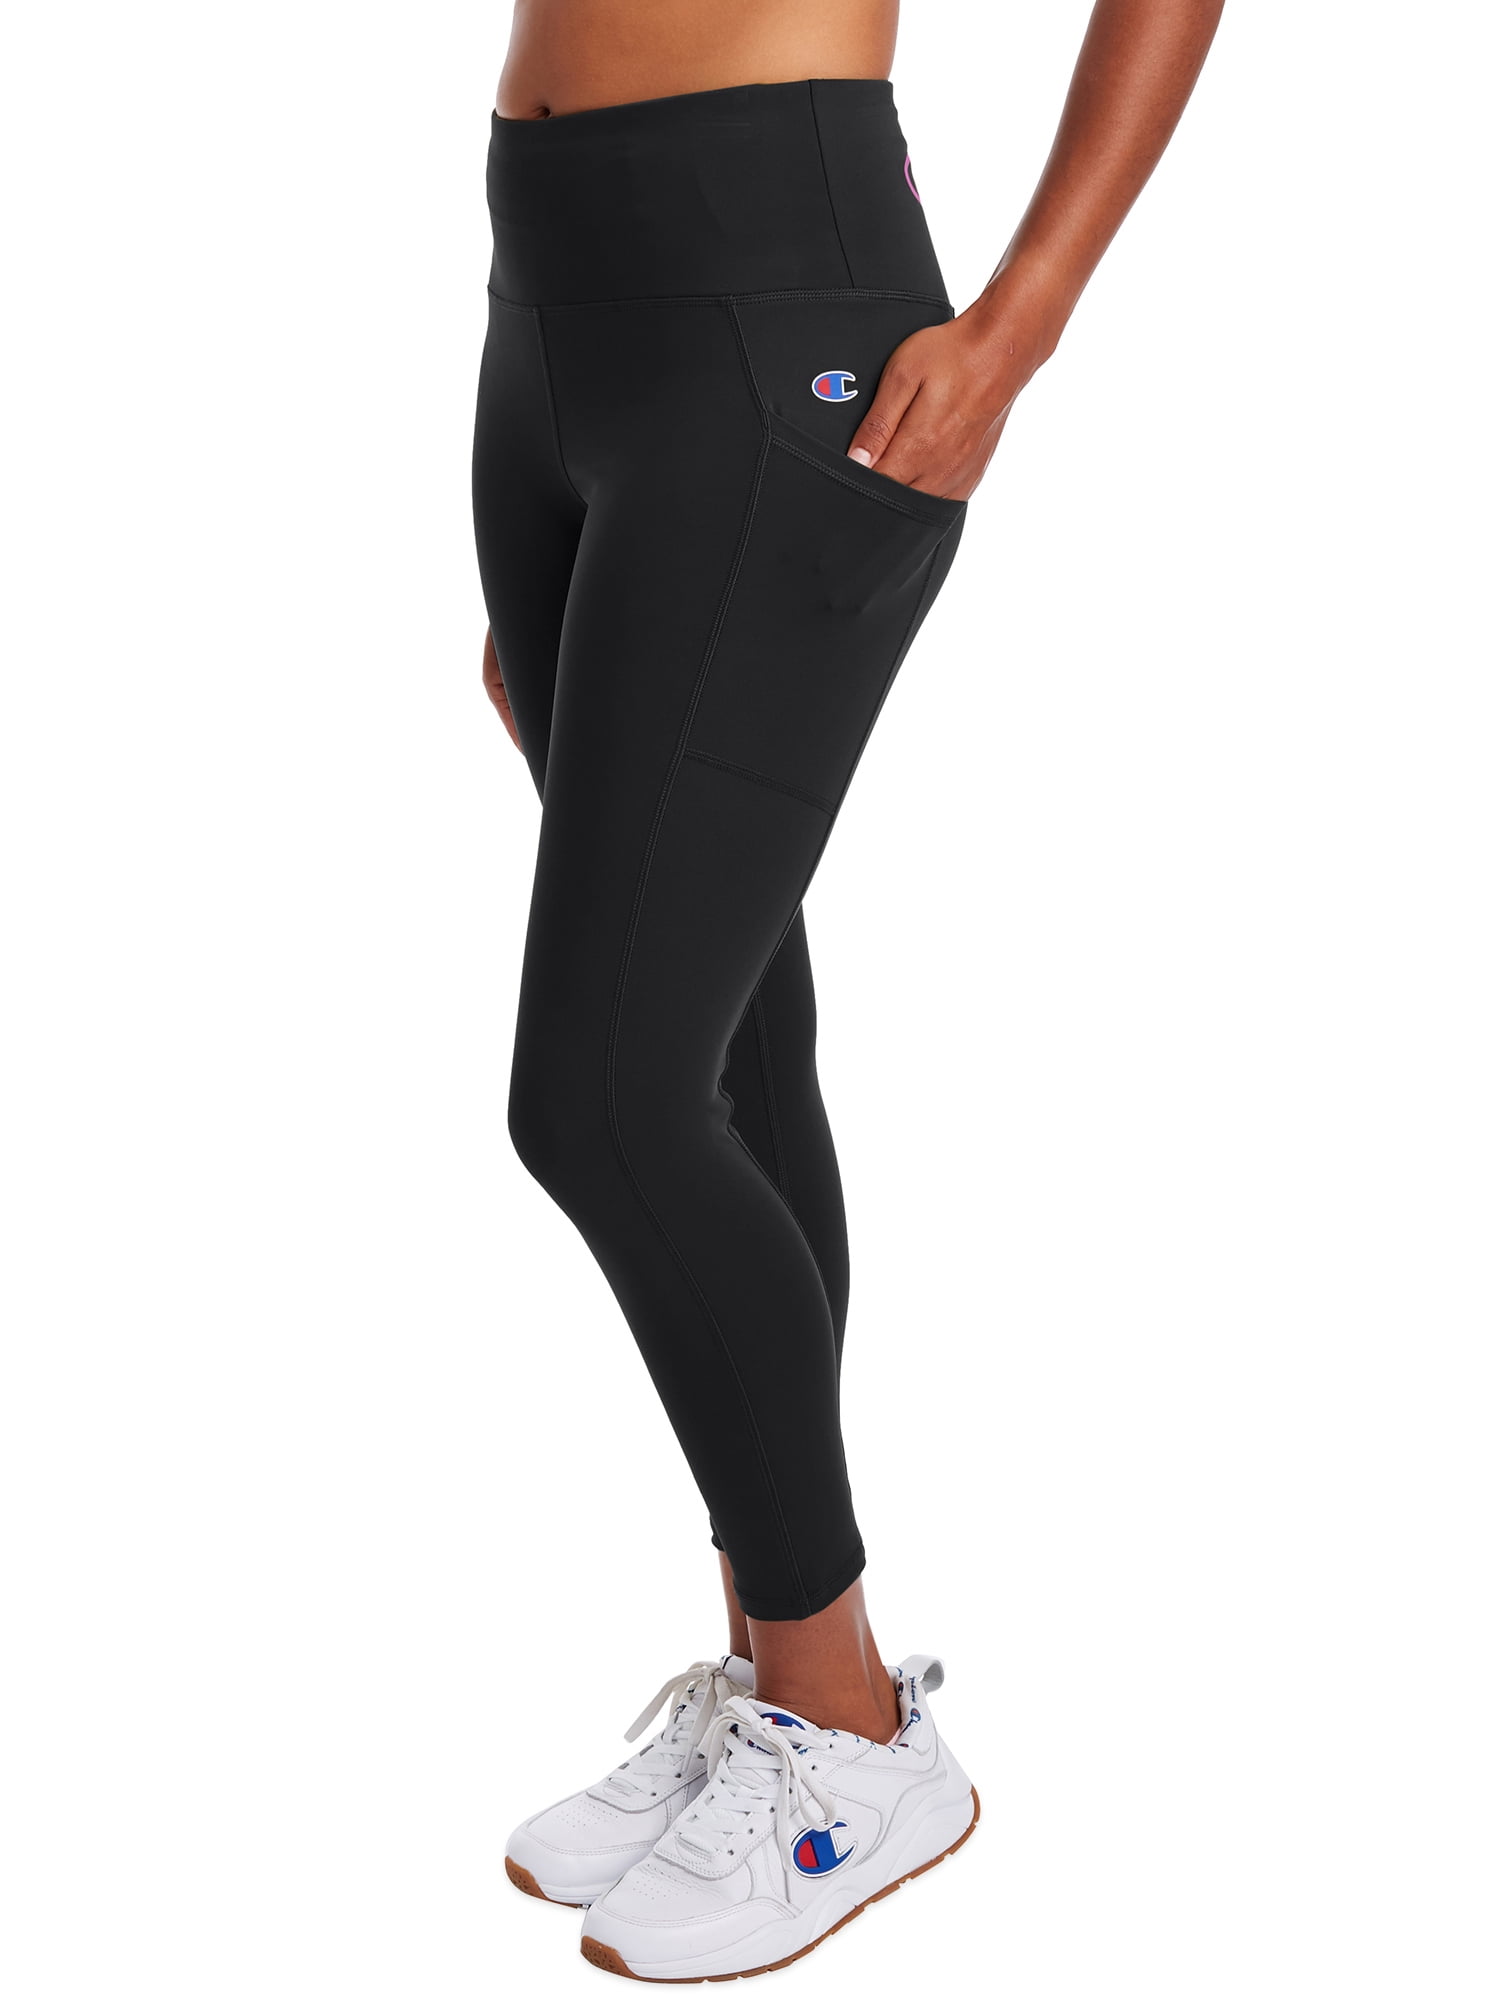 M/ 10 Black. Details about   Sub Sports Womens Performance Dual All Seasons Leggings Size 